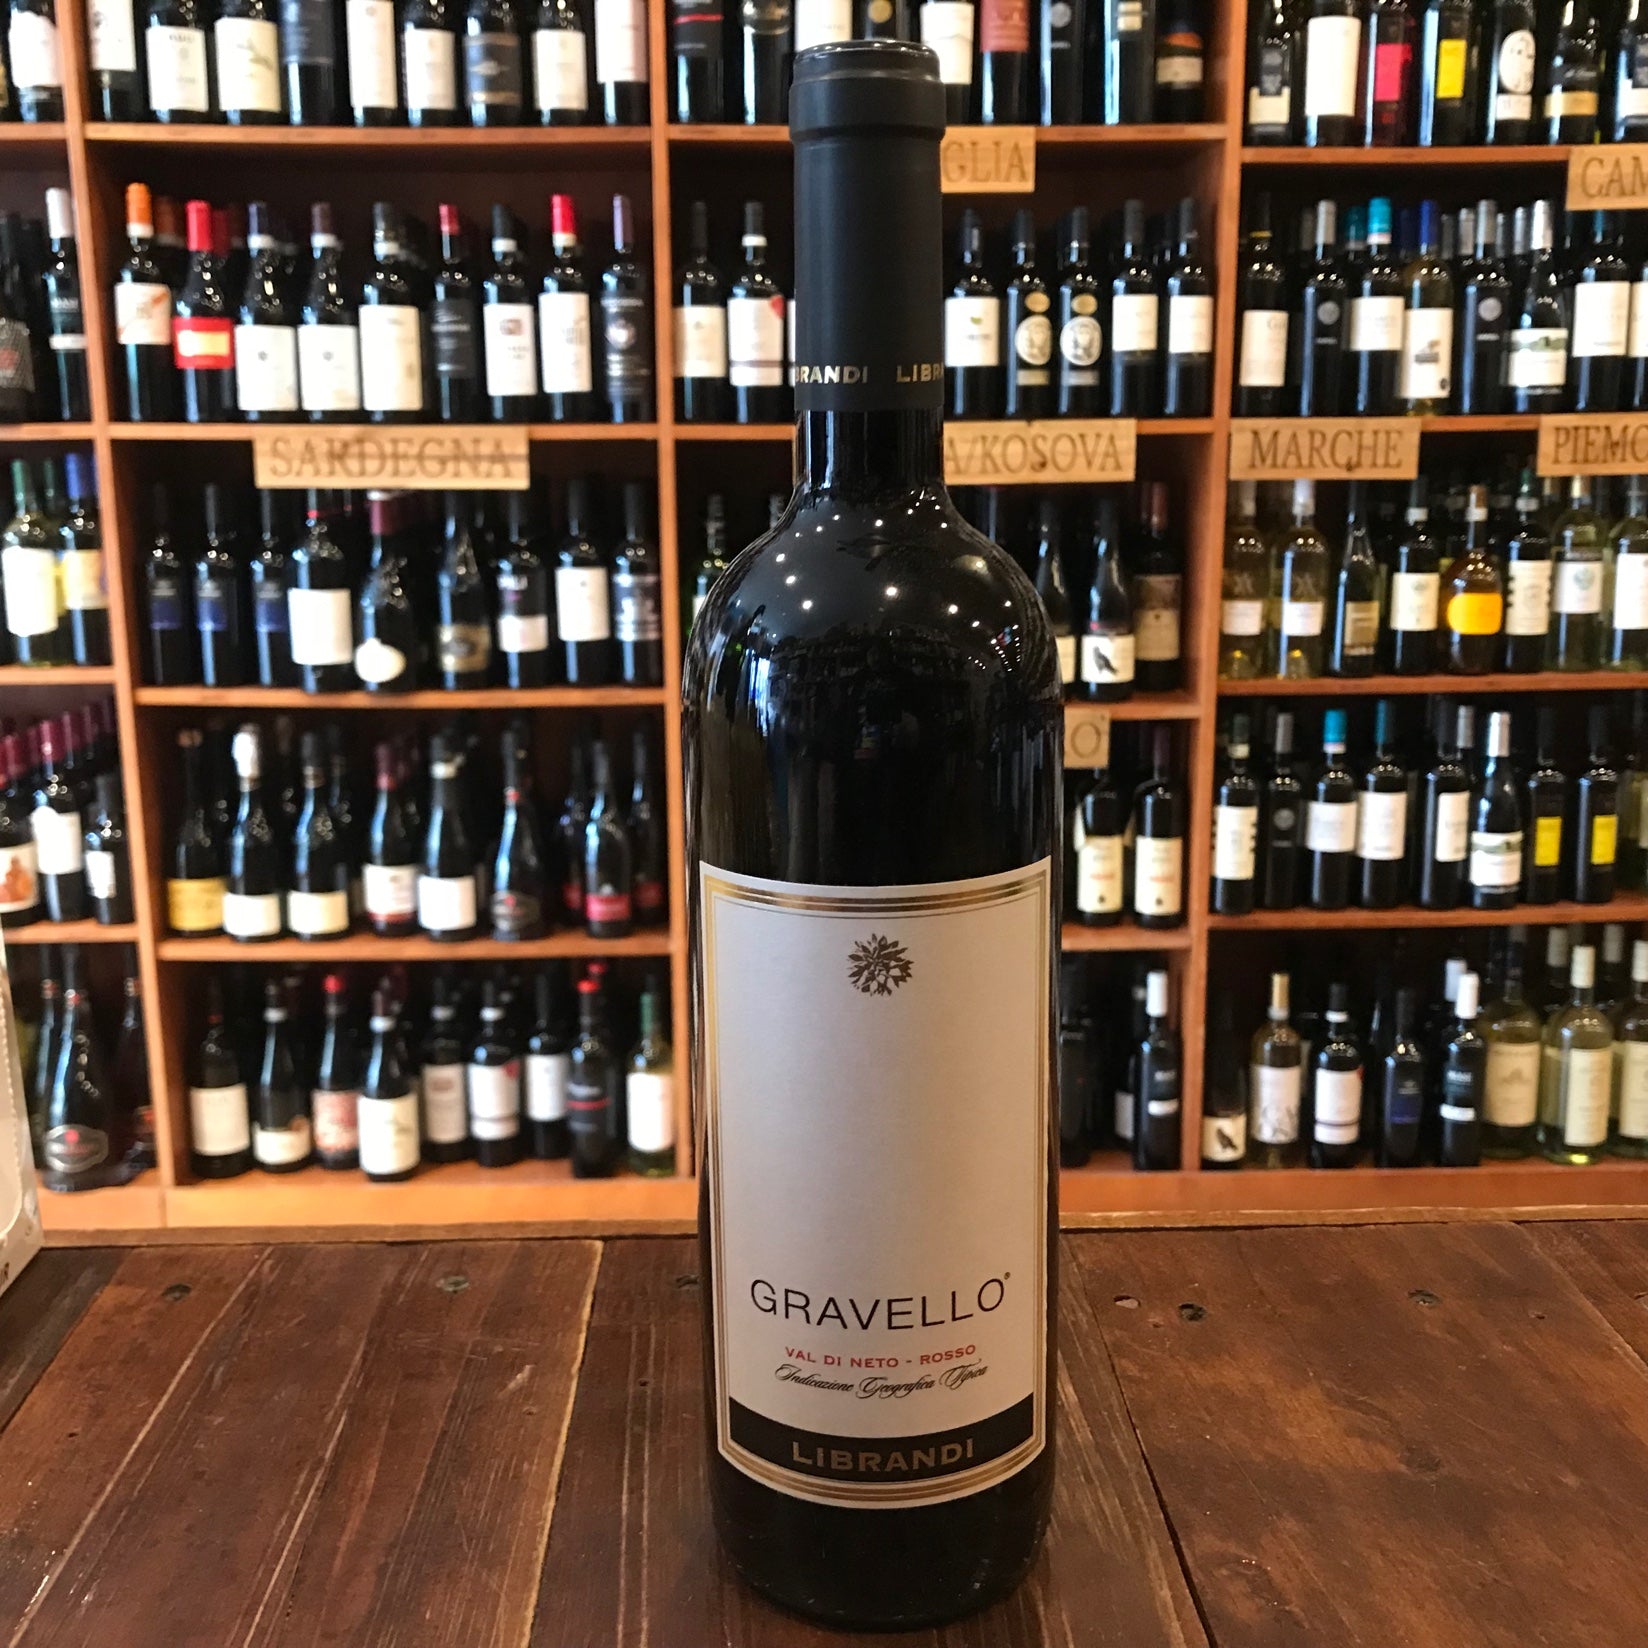 Librandi Gravello 750mL 2017 a tall dark glass wine bottle with a white label and a dark top